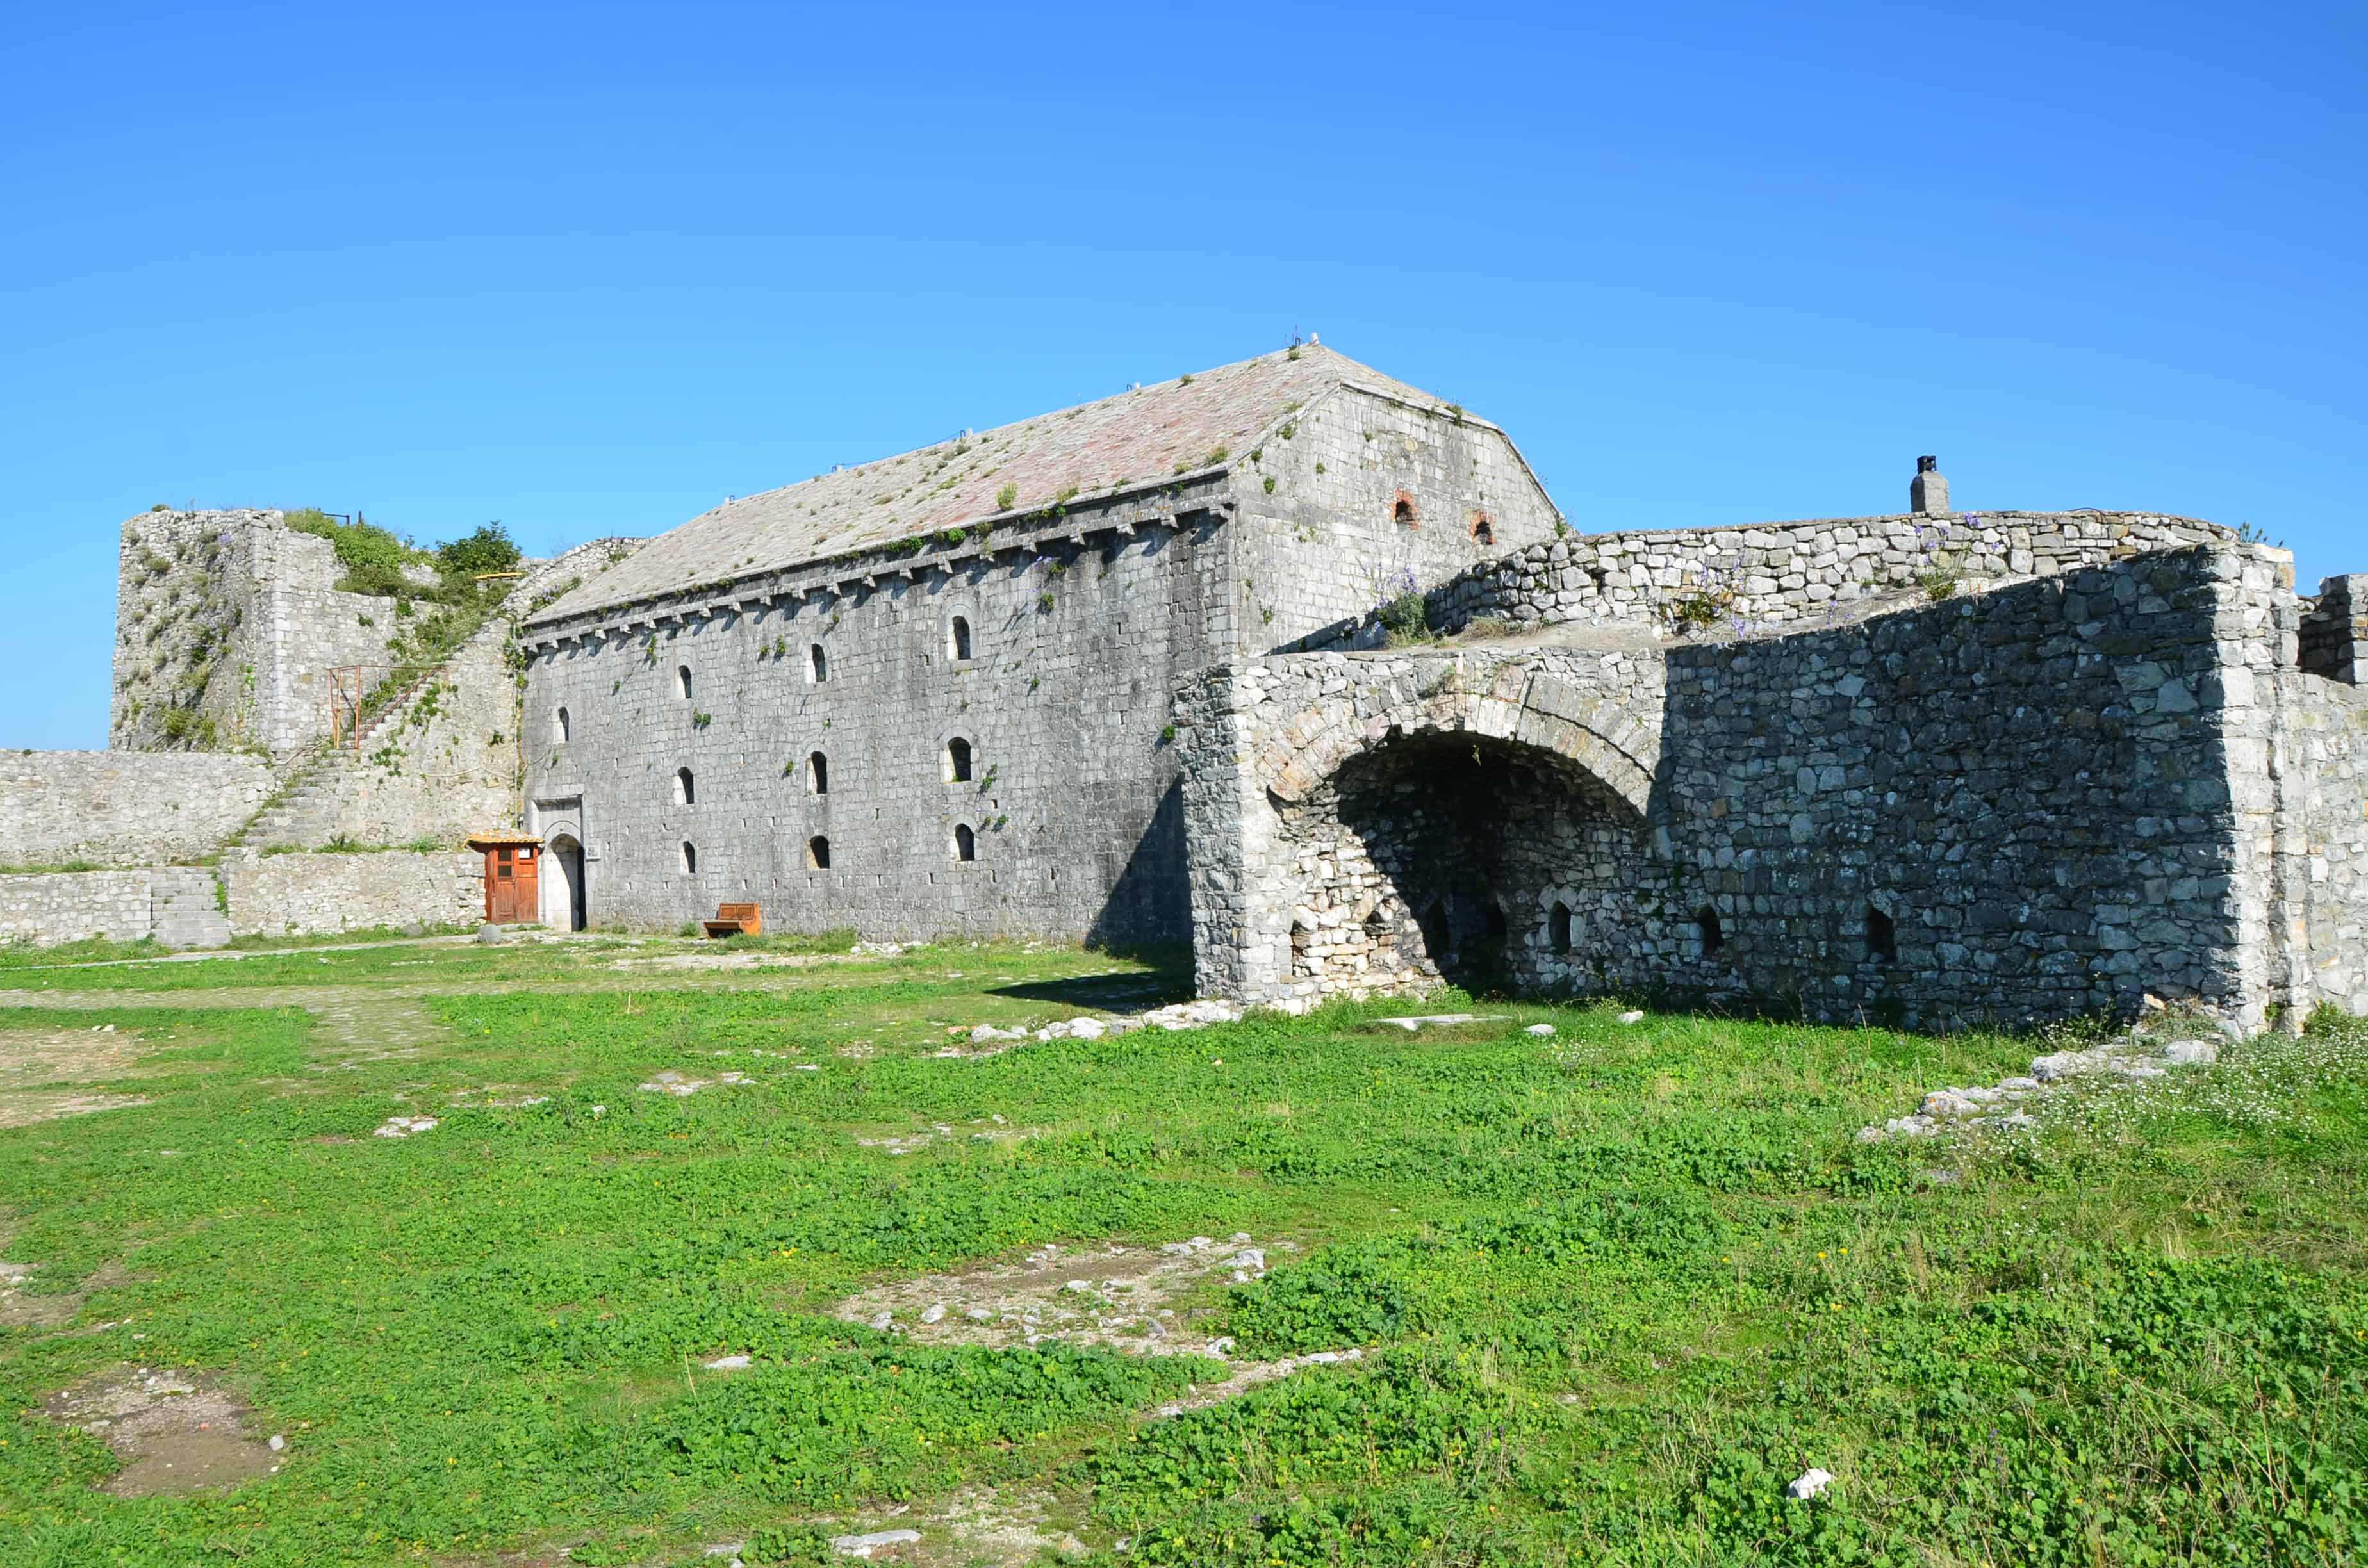 Venetian governor's house and Ottoman arsenal at Rozafa Castle in Shkodër, Albania